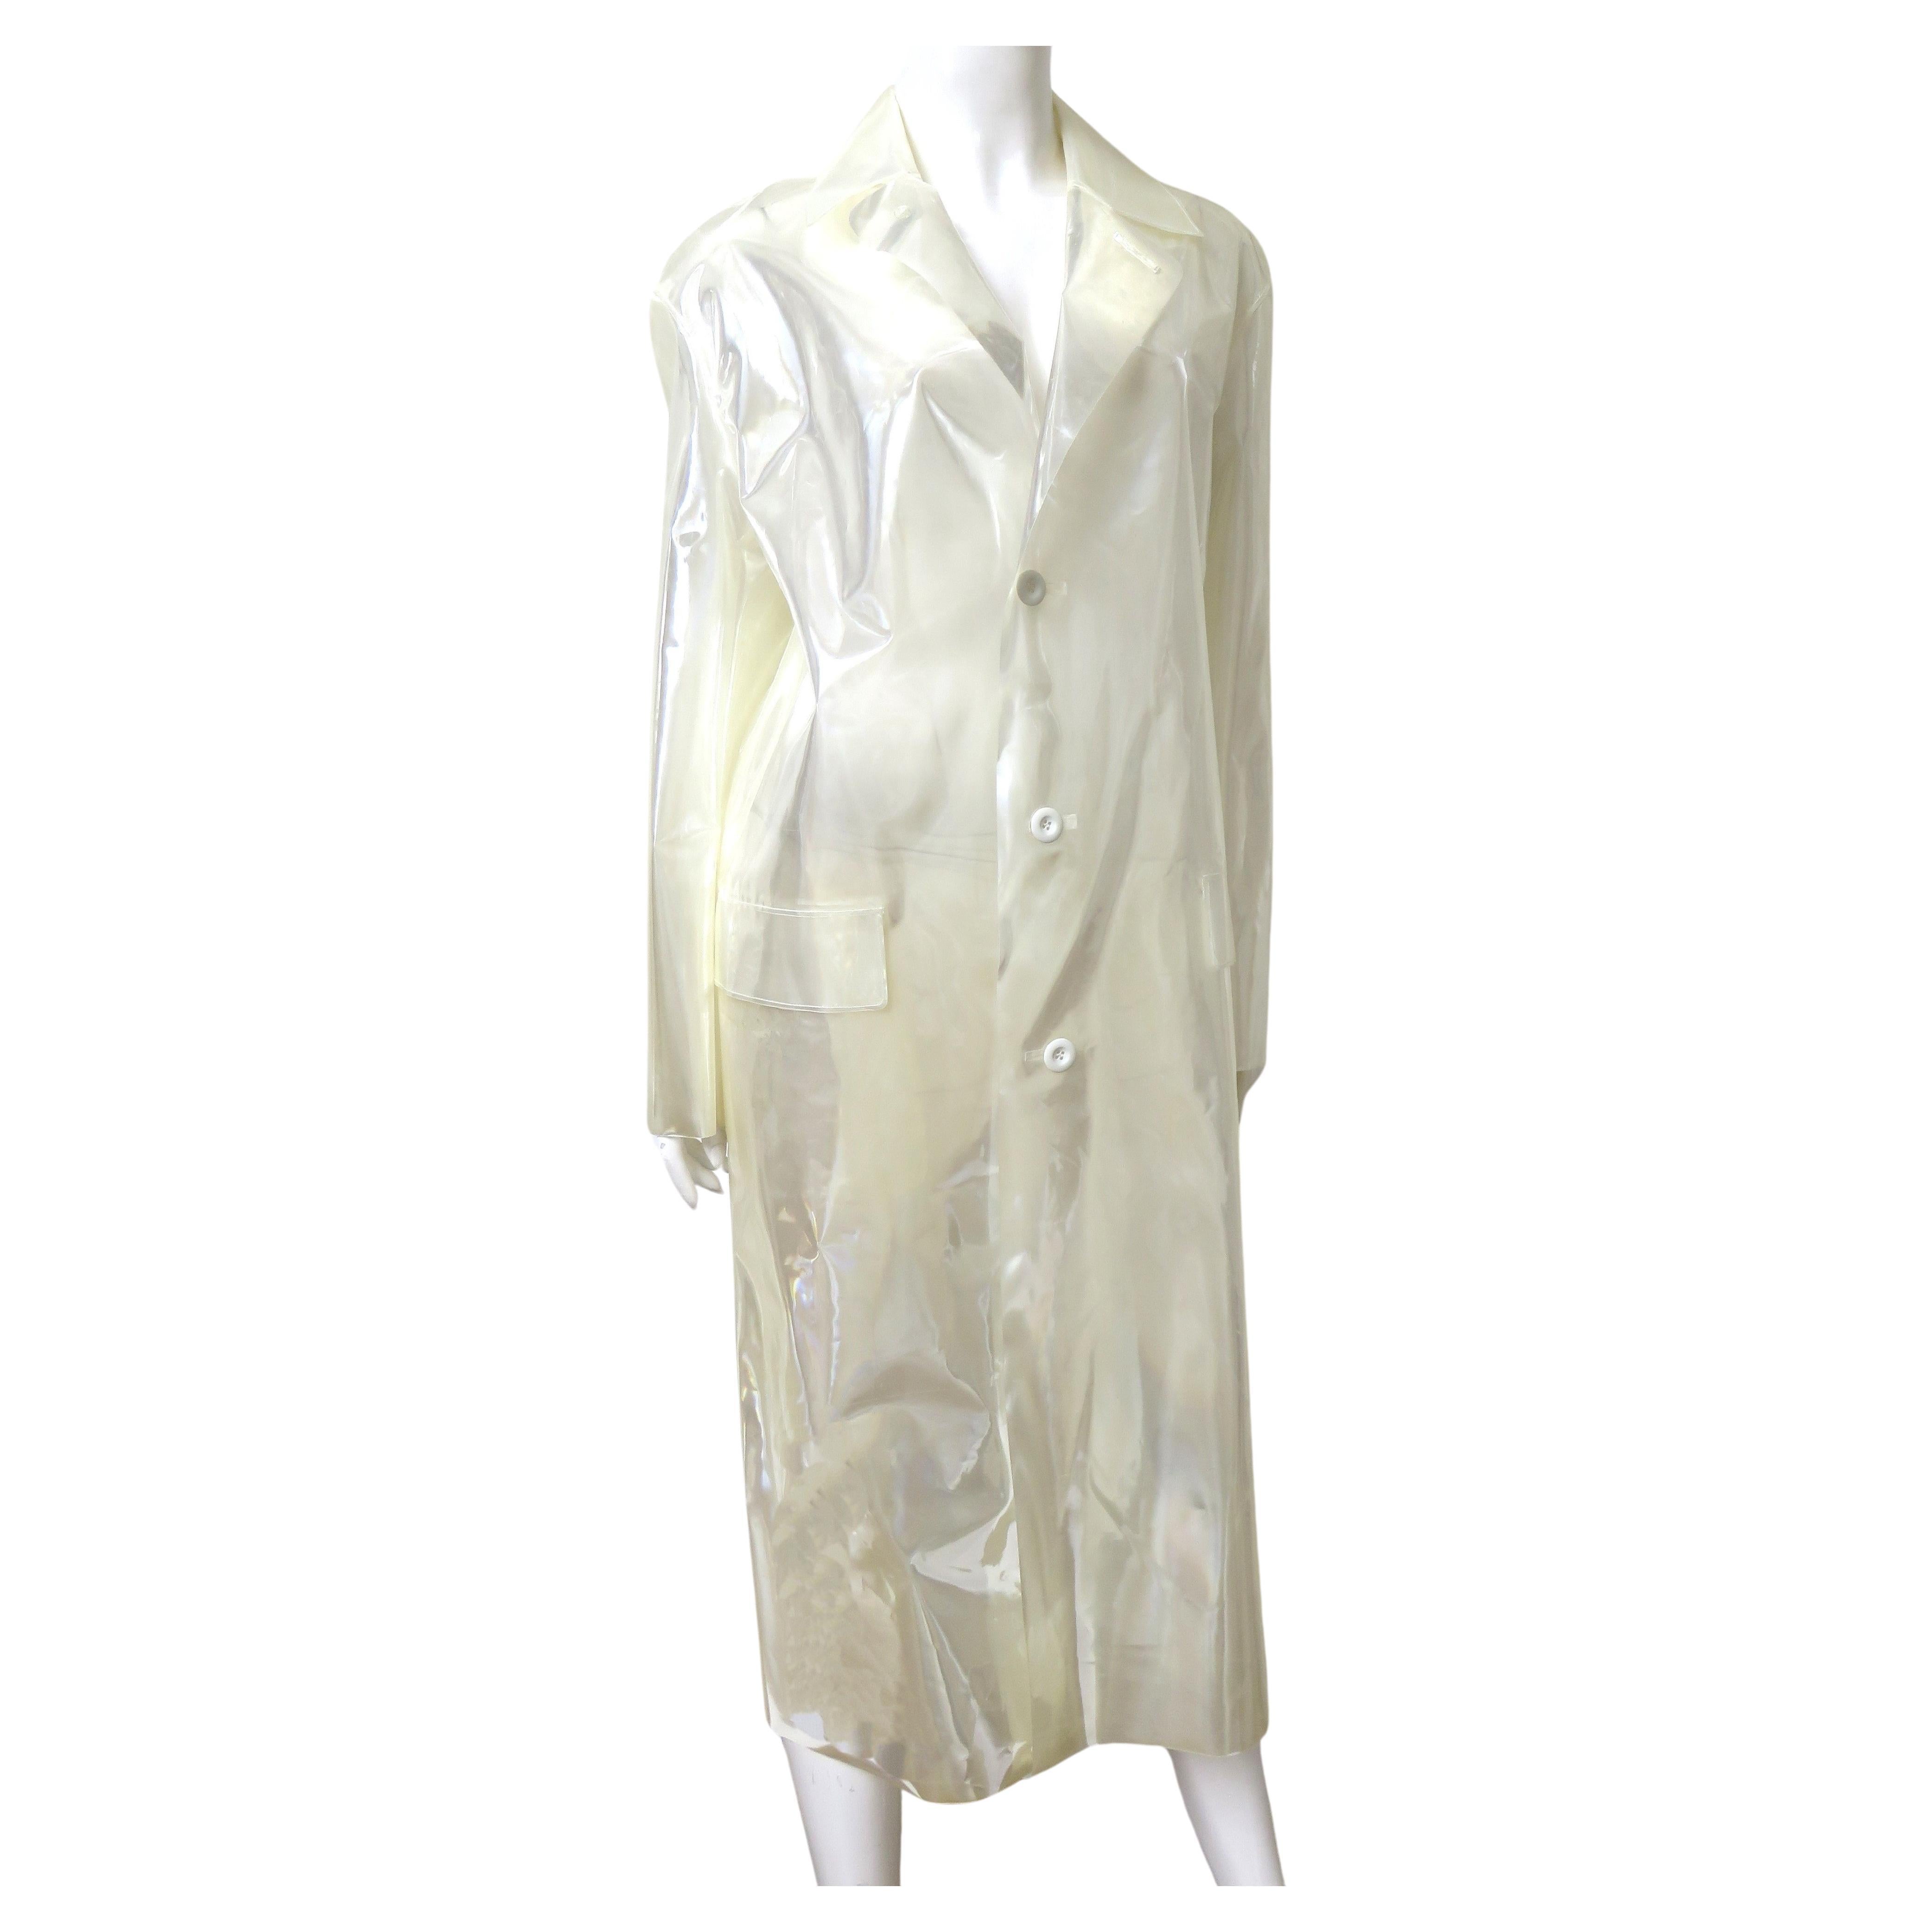 Maison Margiela New Translucent Raincoat S/S 2018 For Sale